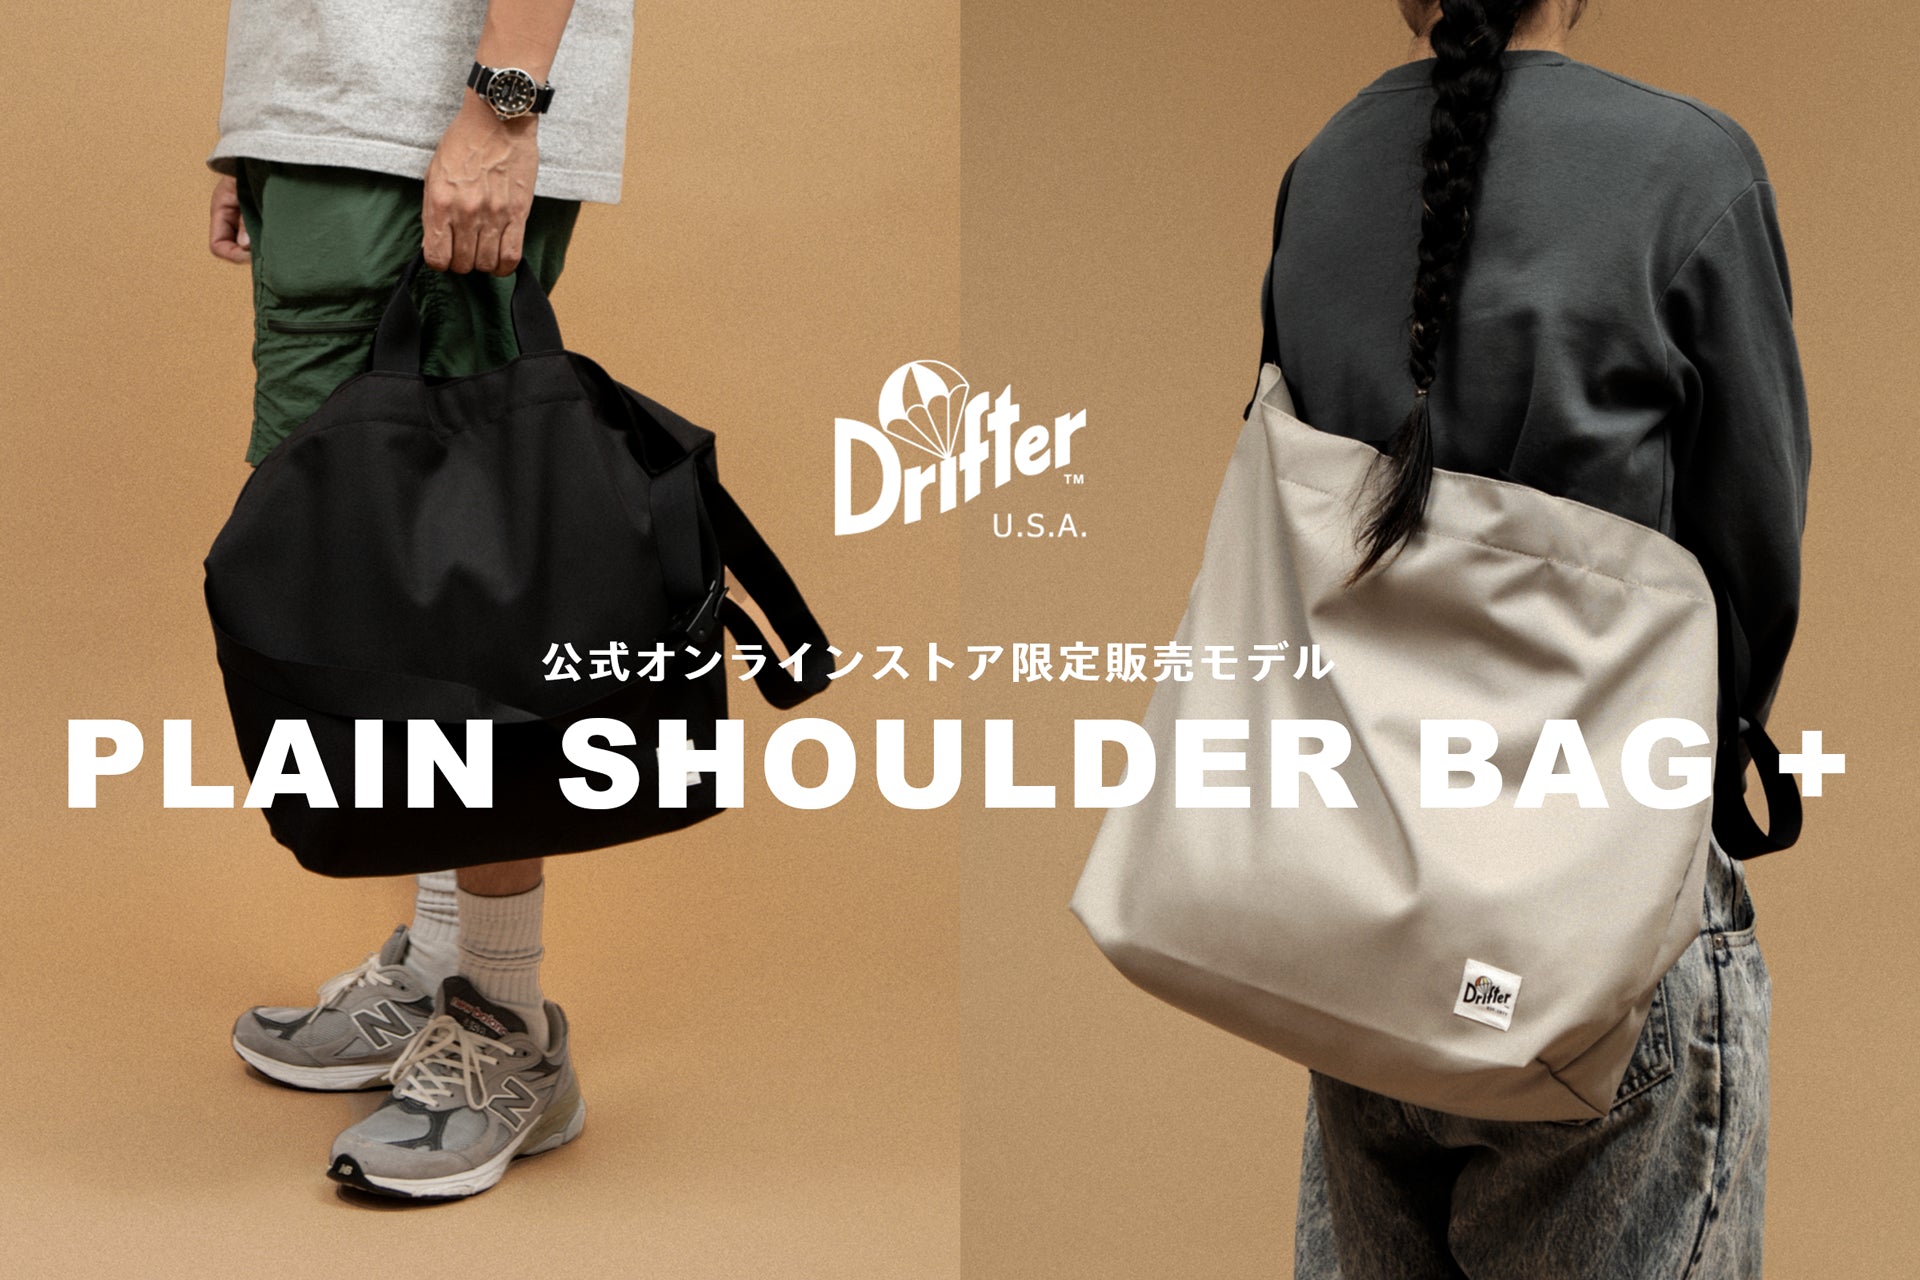 【PLAIN SHOULDER BAG +】Drifter Official Online Store Limited Model  New Arrival Review / 公式オンラインストア限定モデル新発売レビュー